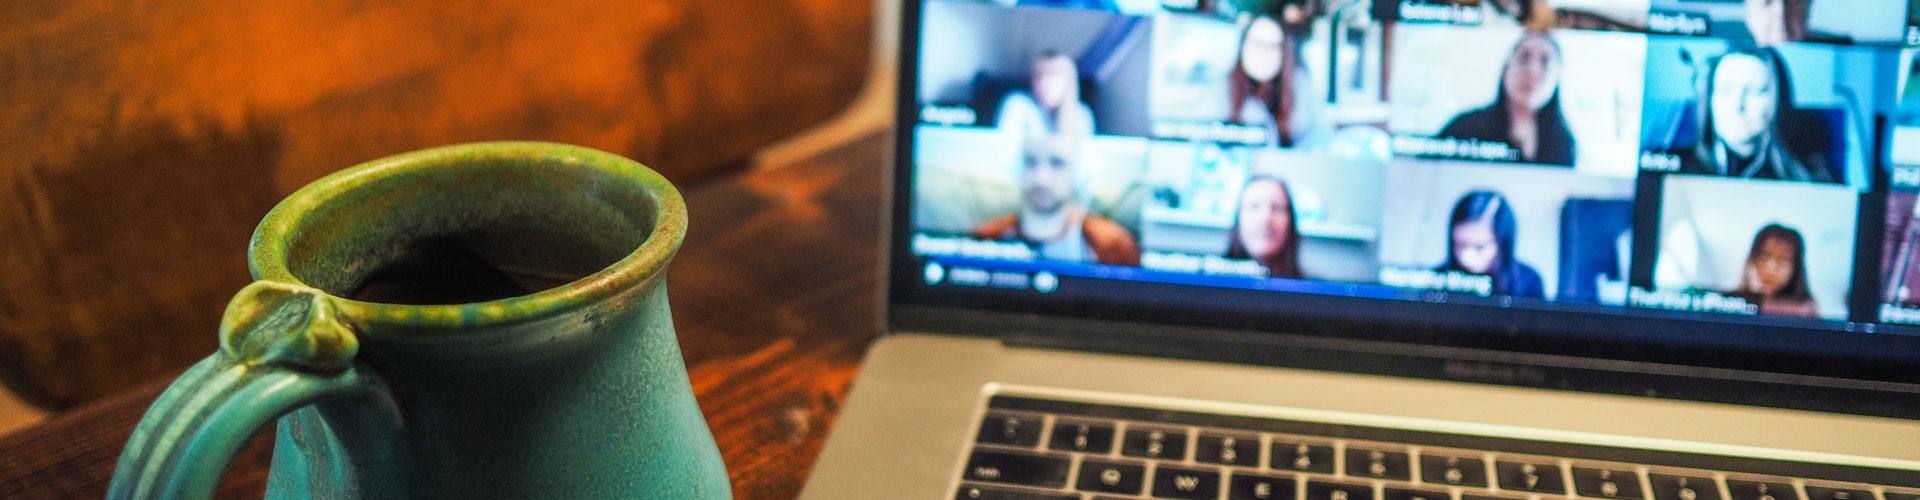 online meeting with mug of coffee